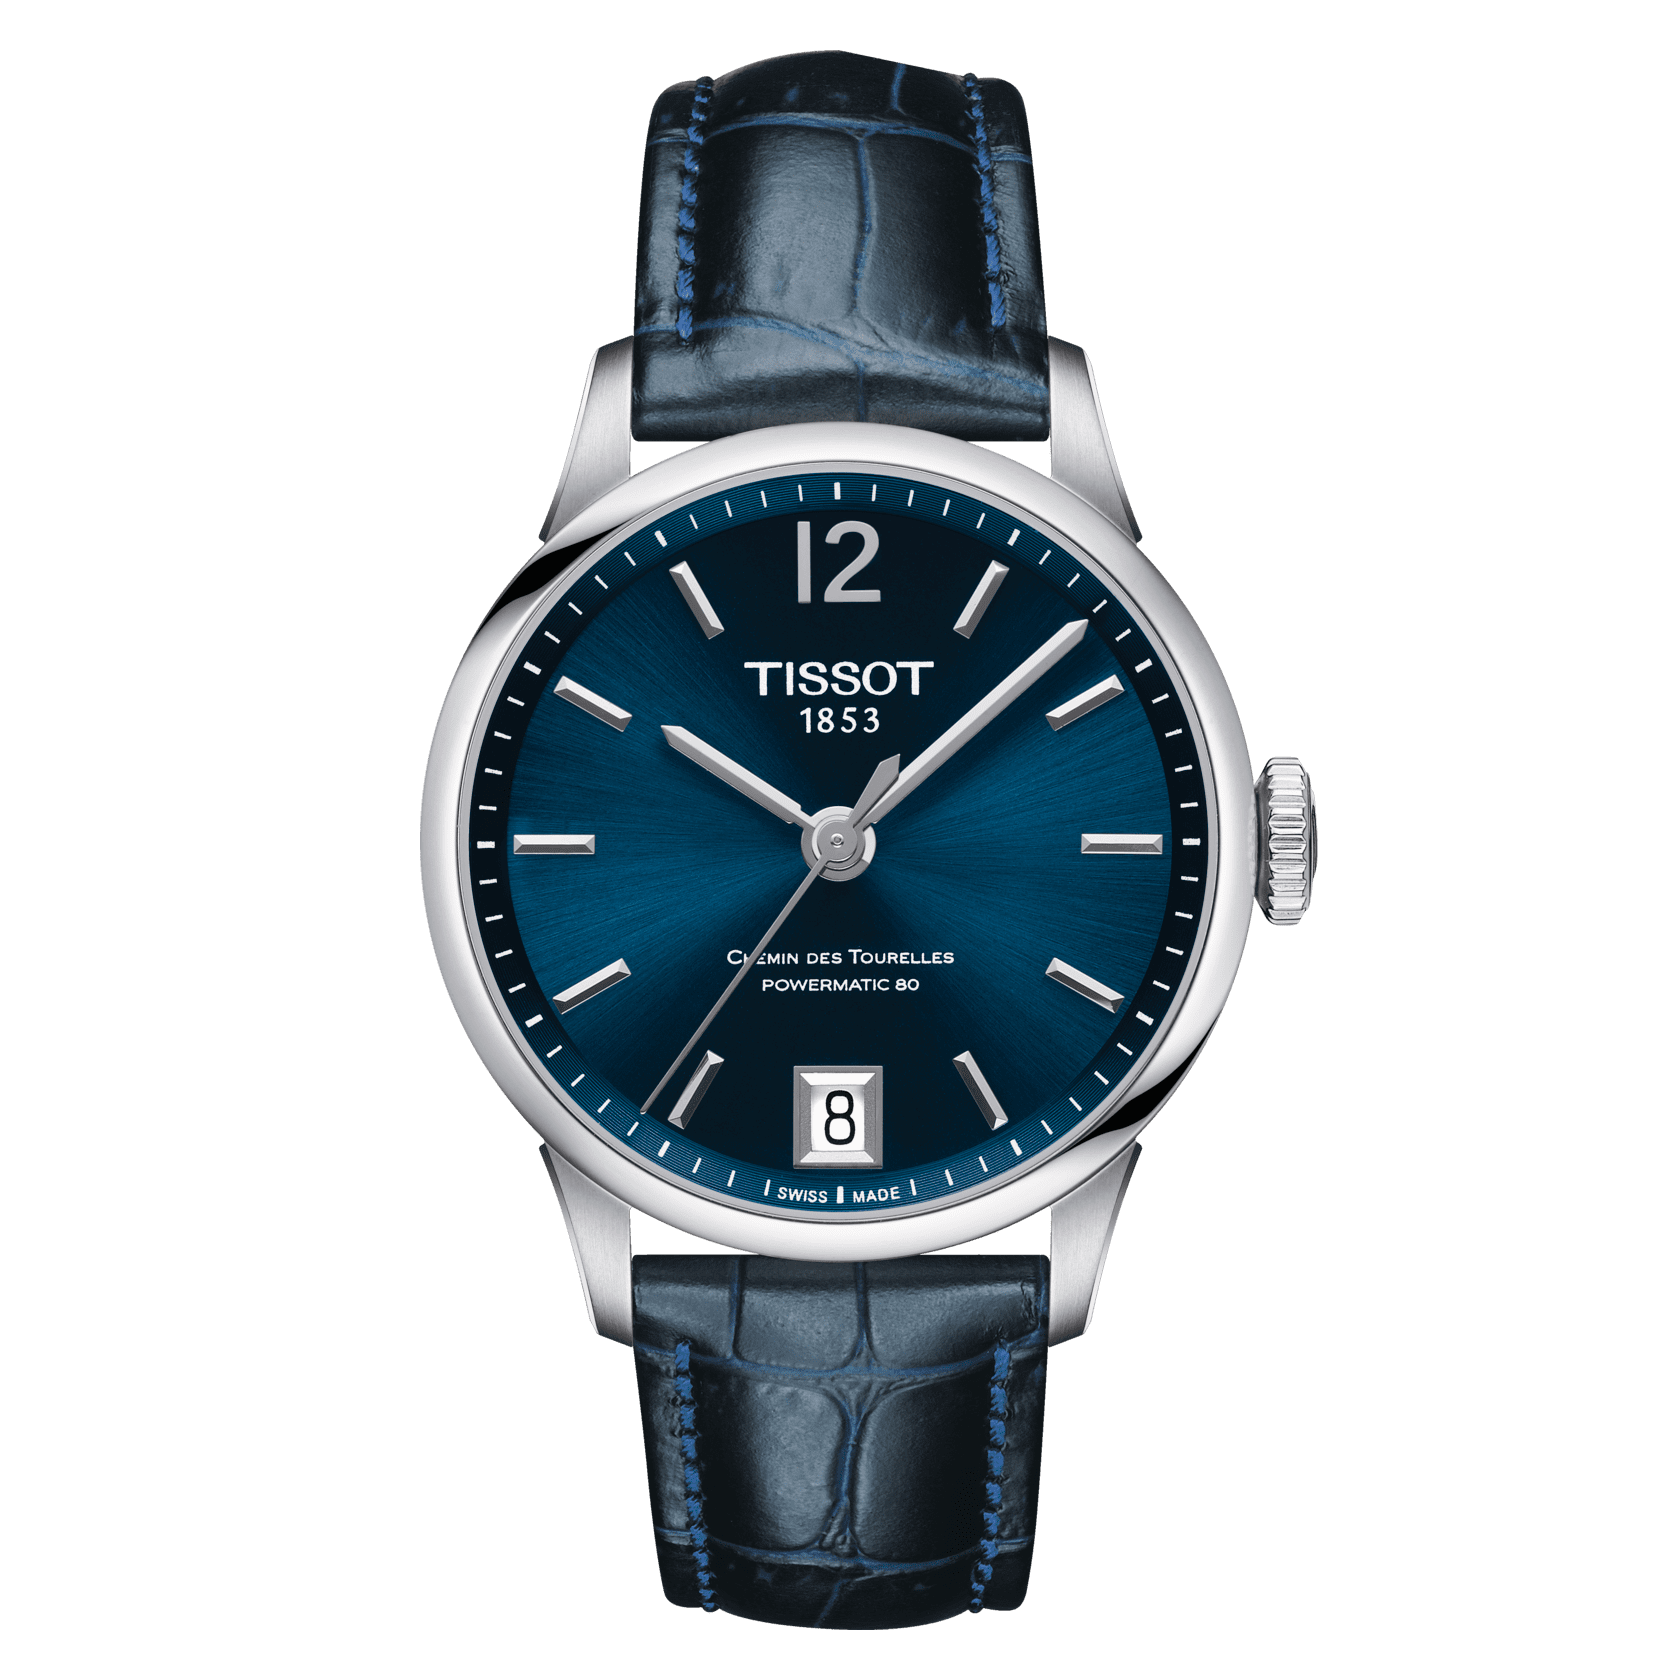 Romain Jerome Wholesale Watches Replica